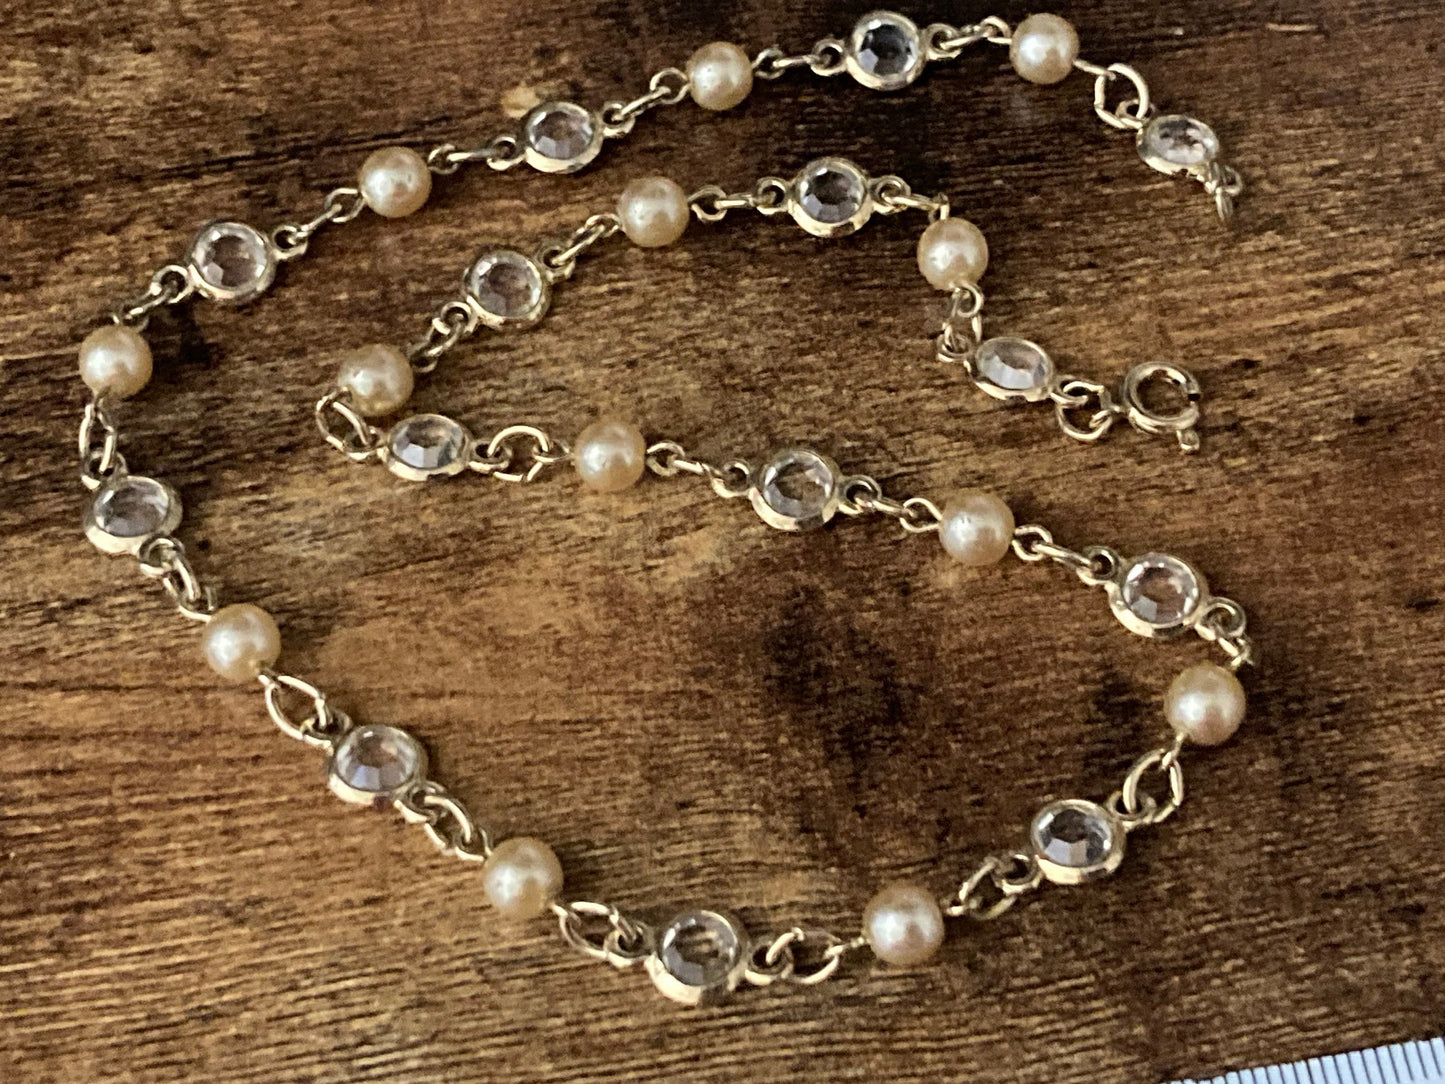 Retro Rivière bezel set clear  glass and faux pearl gold tone necklace